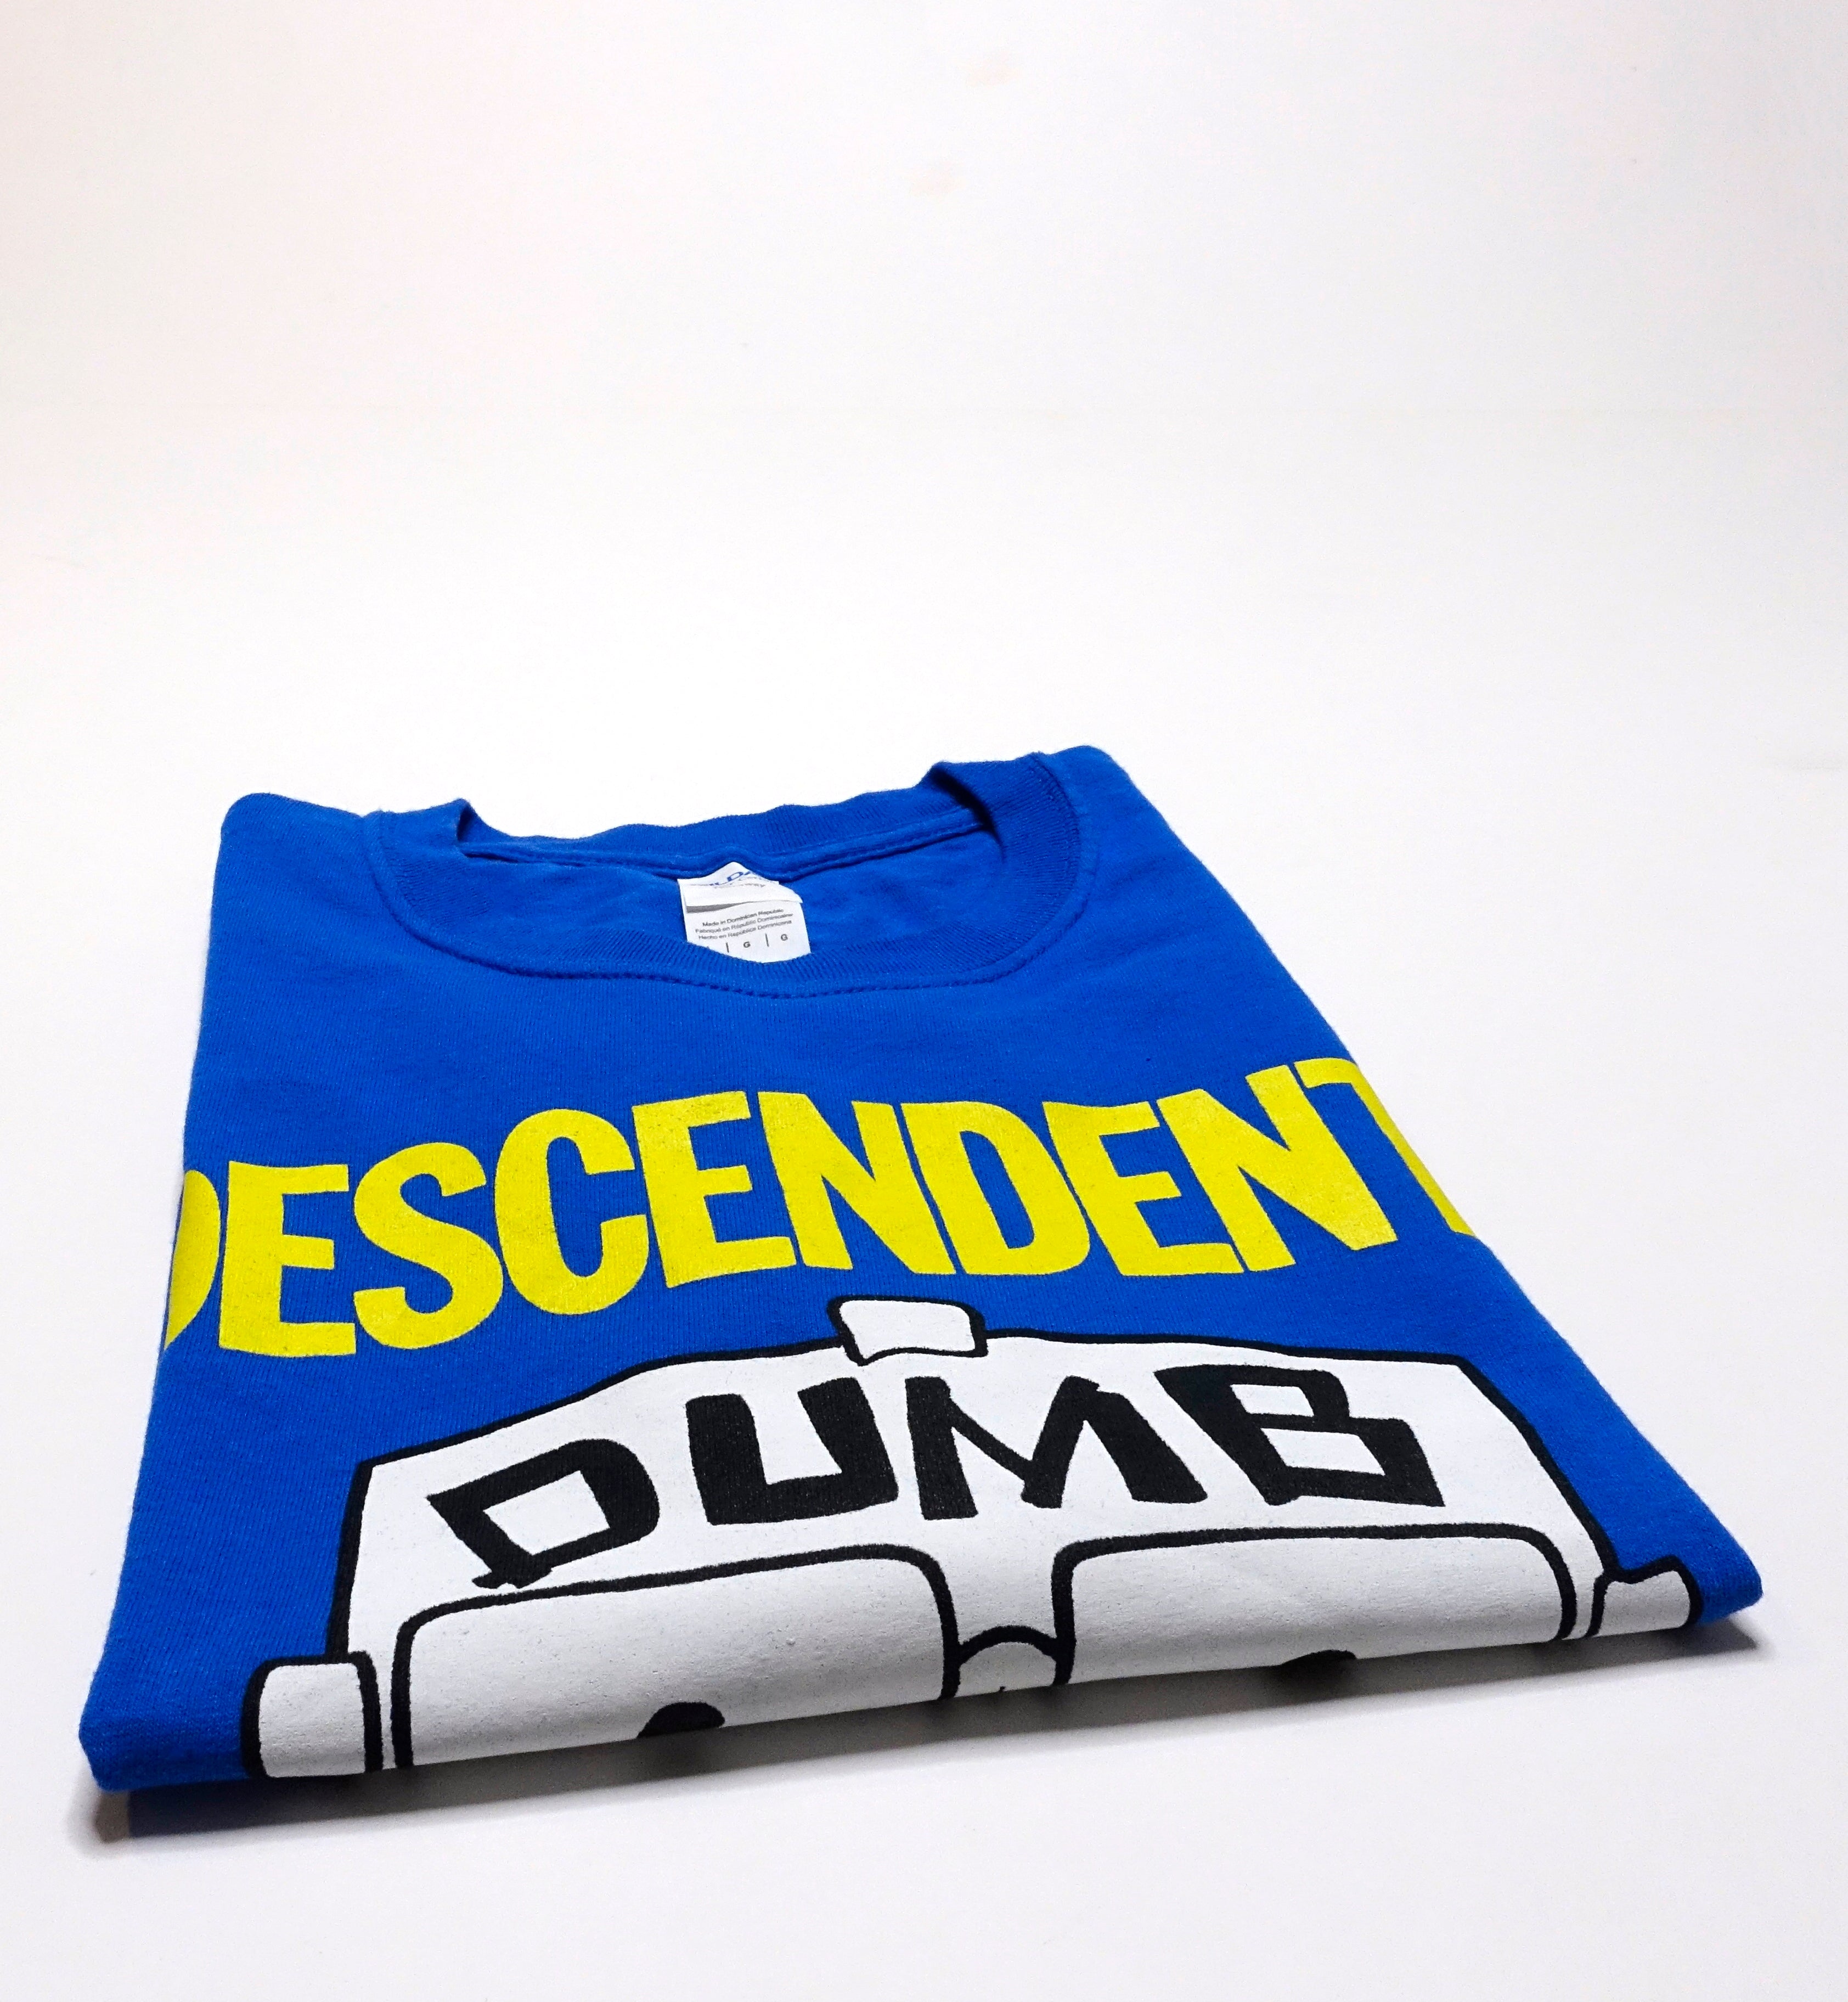 Descendents - Vancouver Night 2 2017 Tour Shirt Size Large